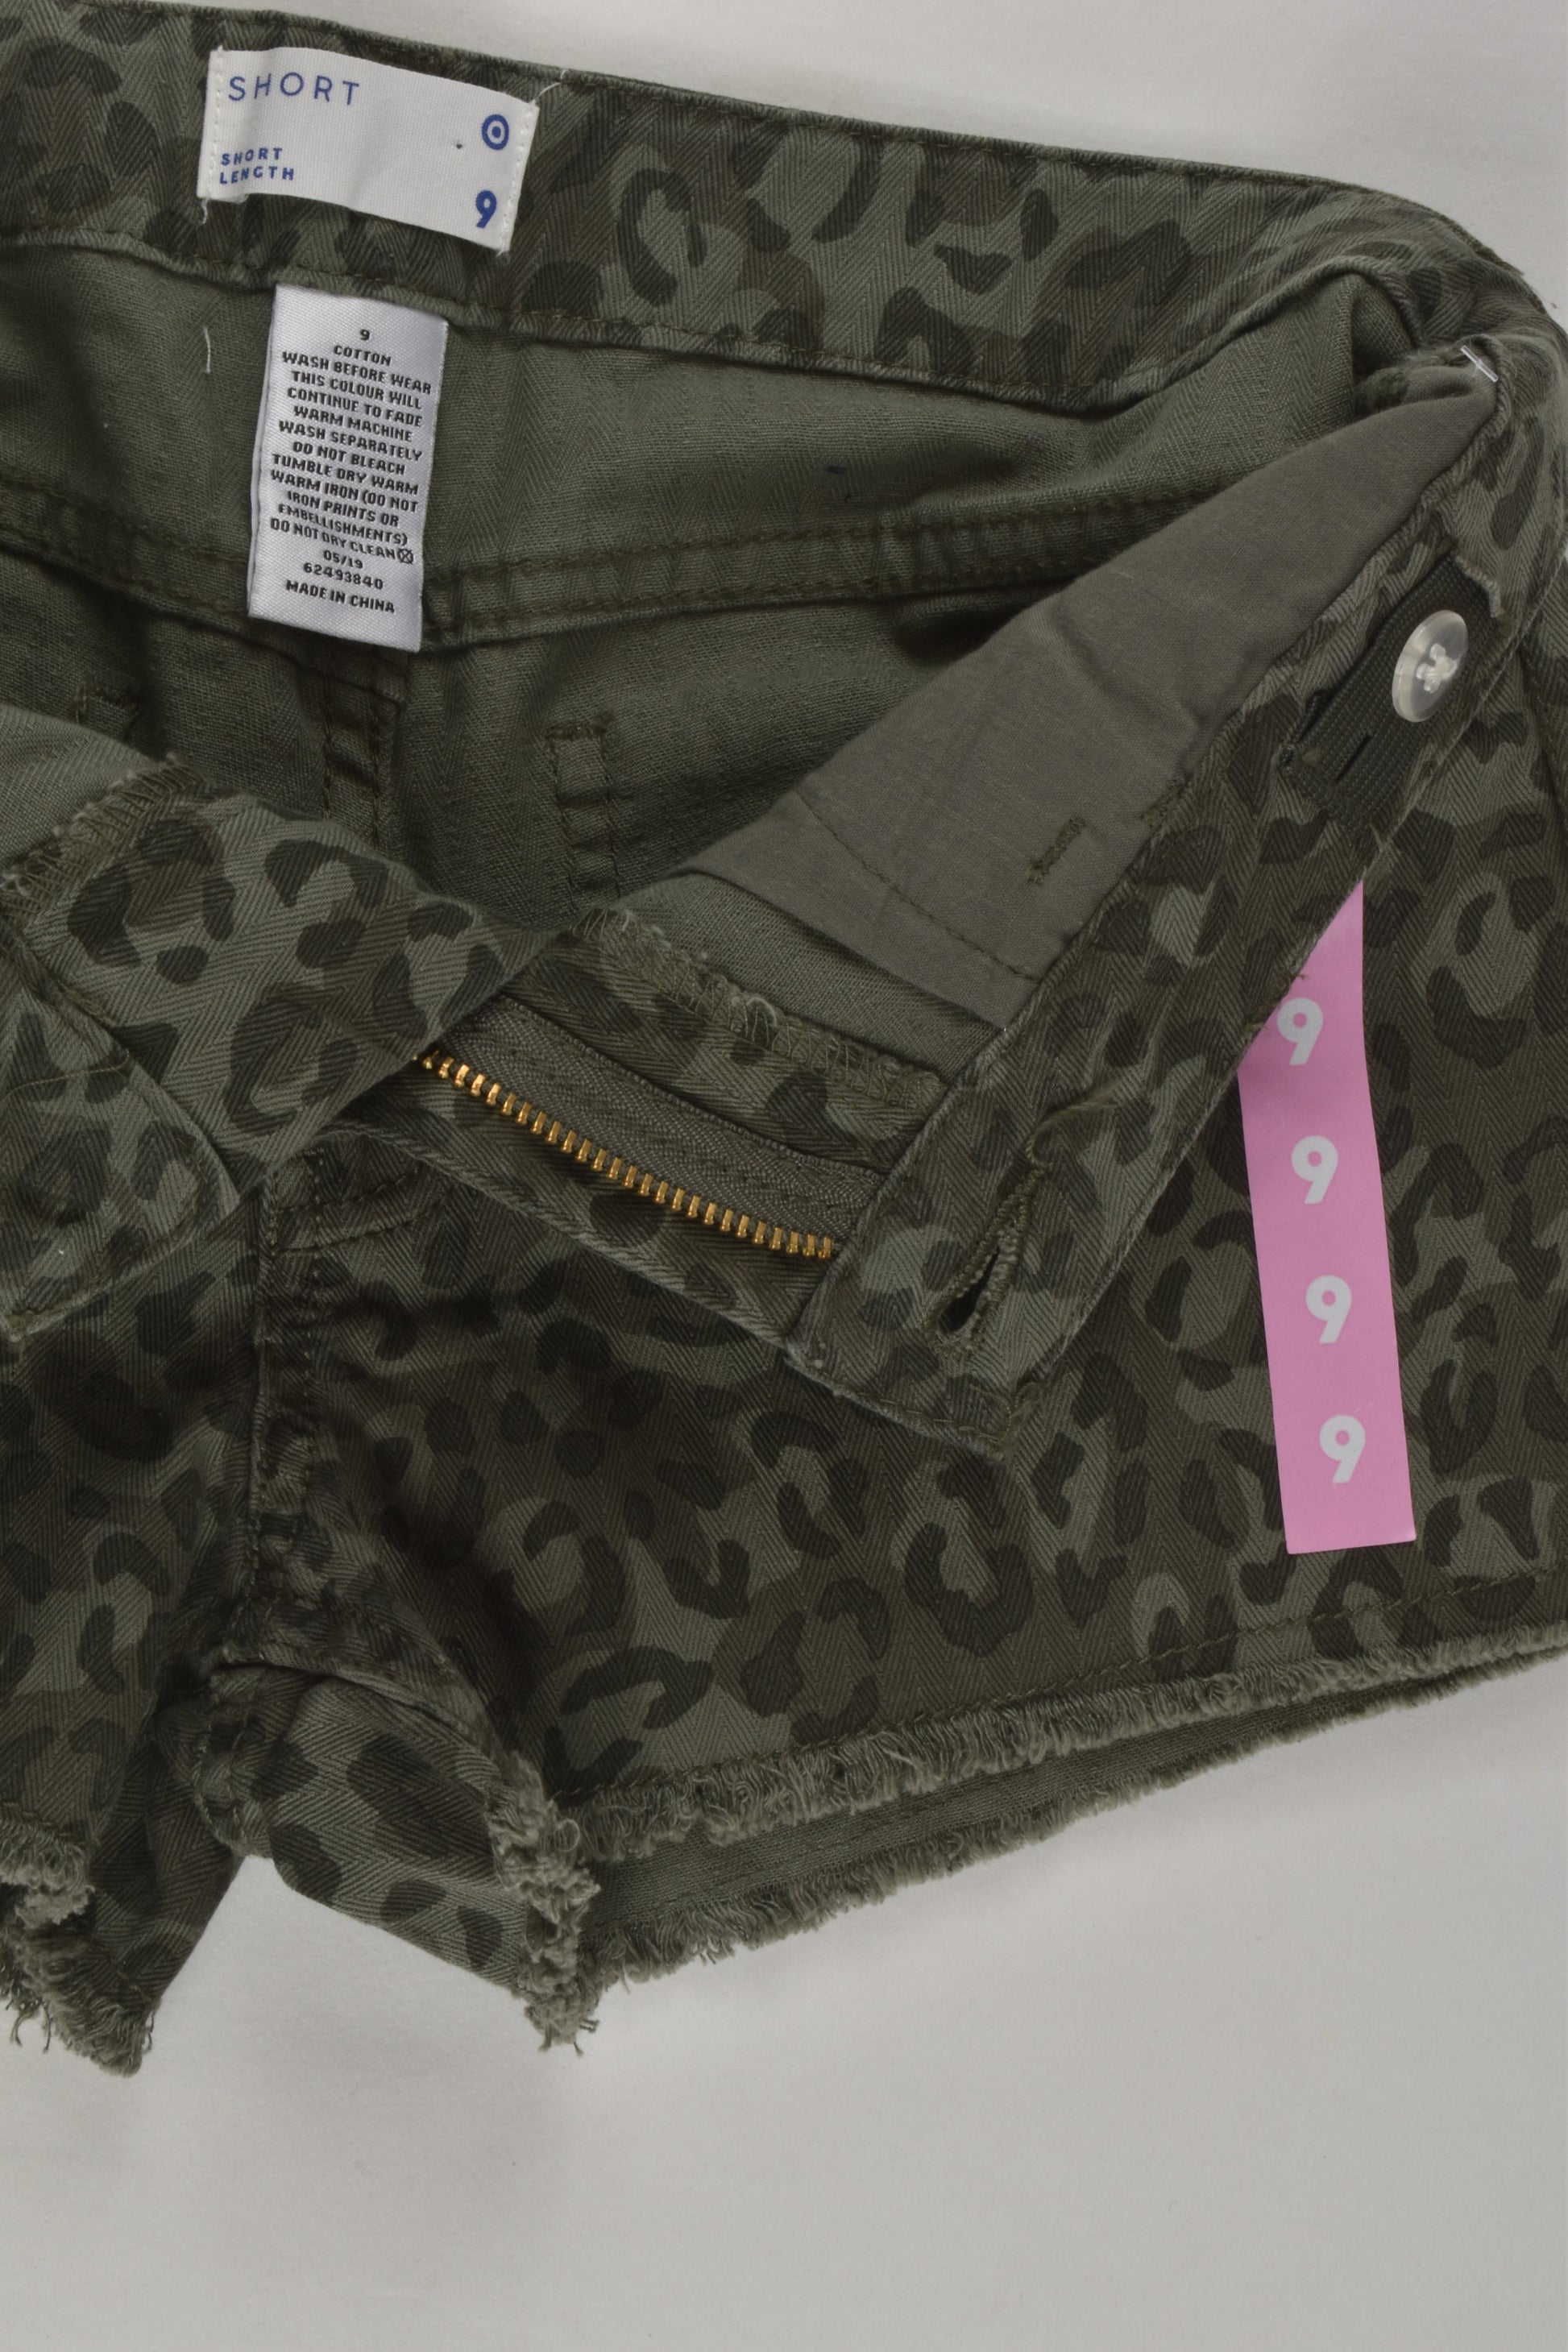 NEW Target Size 9 Leopard Print Shorts